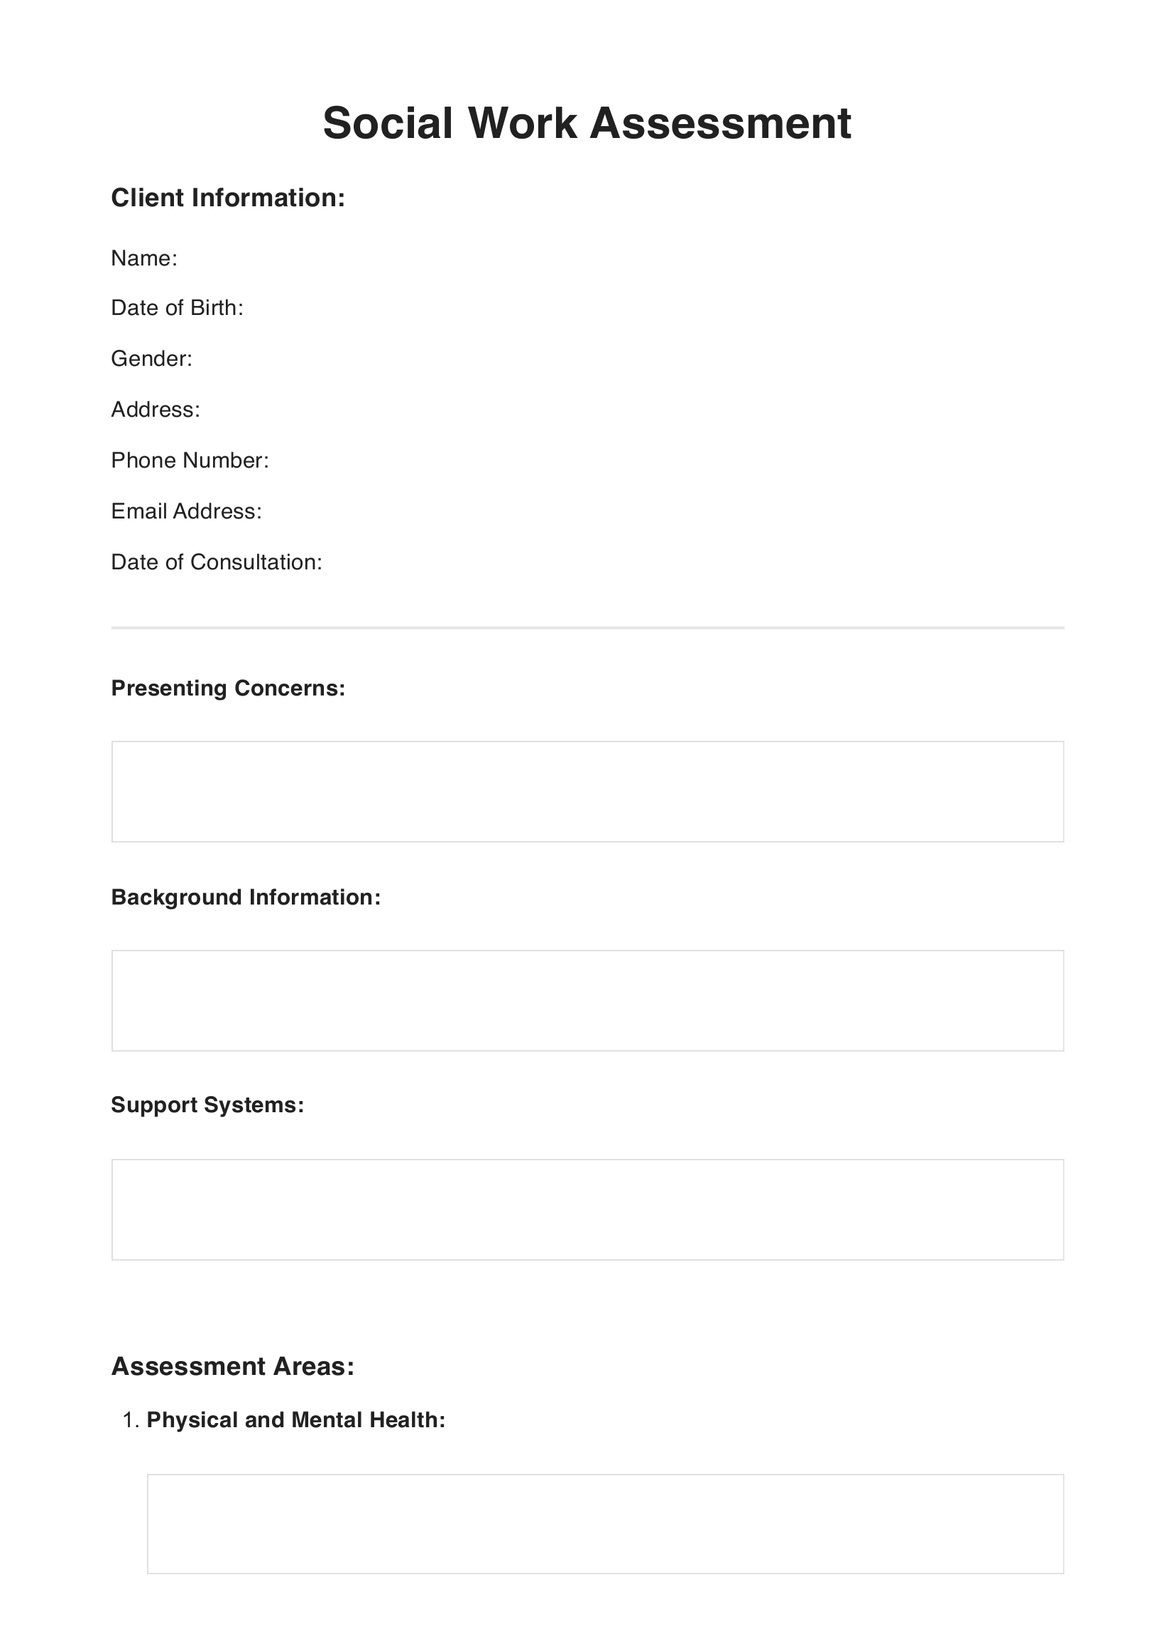 Social Work Assessment PDF Example